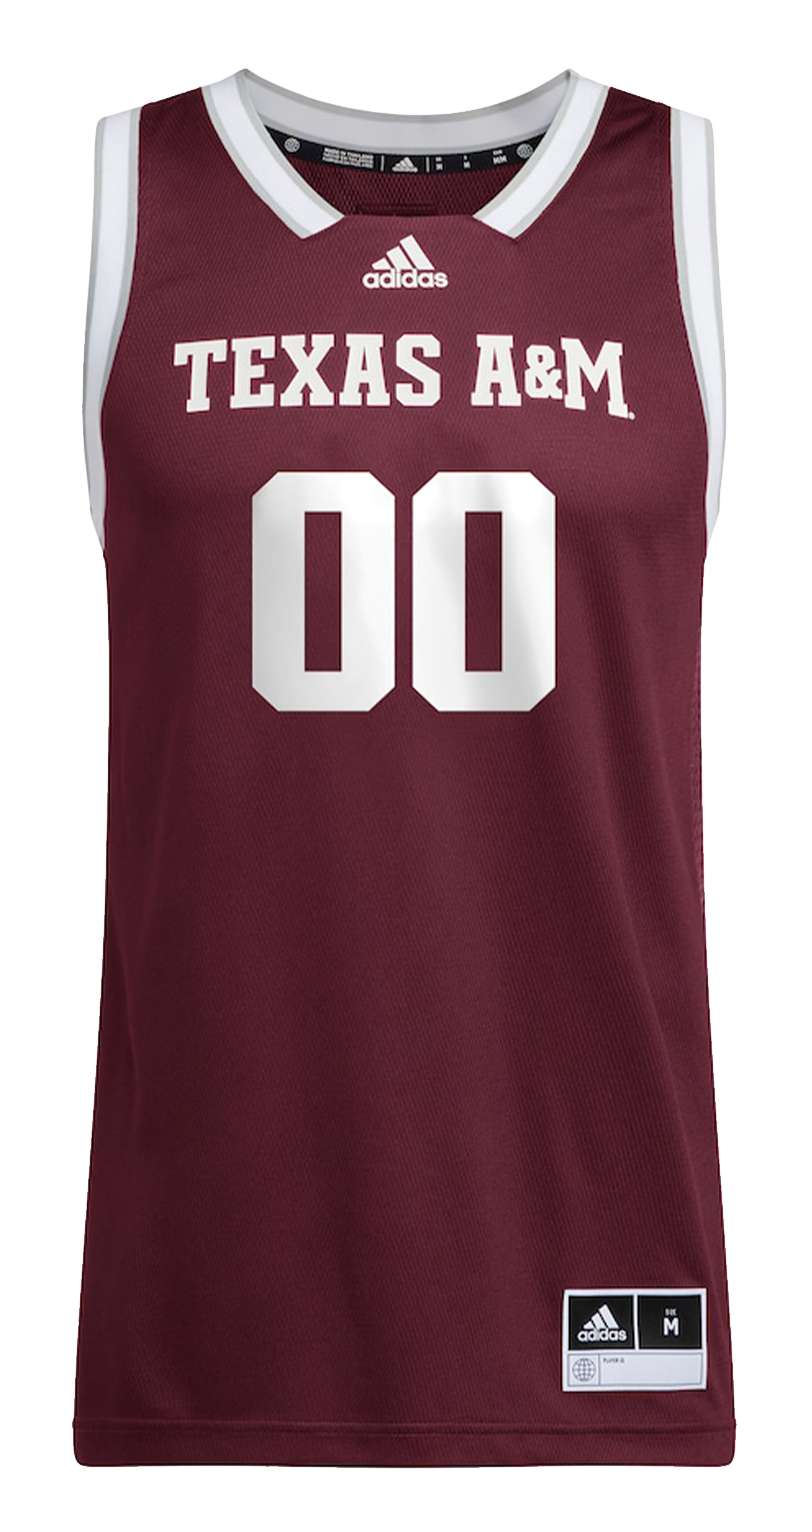 Texas A&M Adidas CUSTOM Basketball